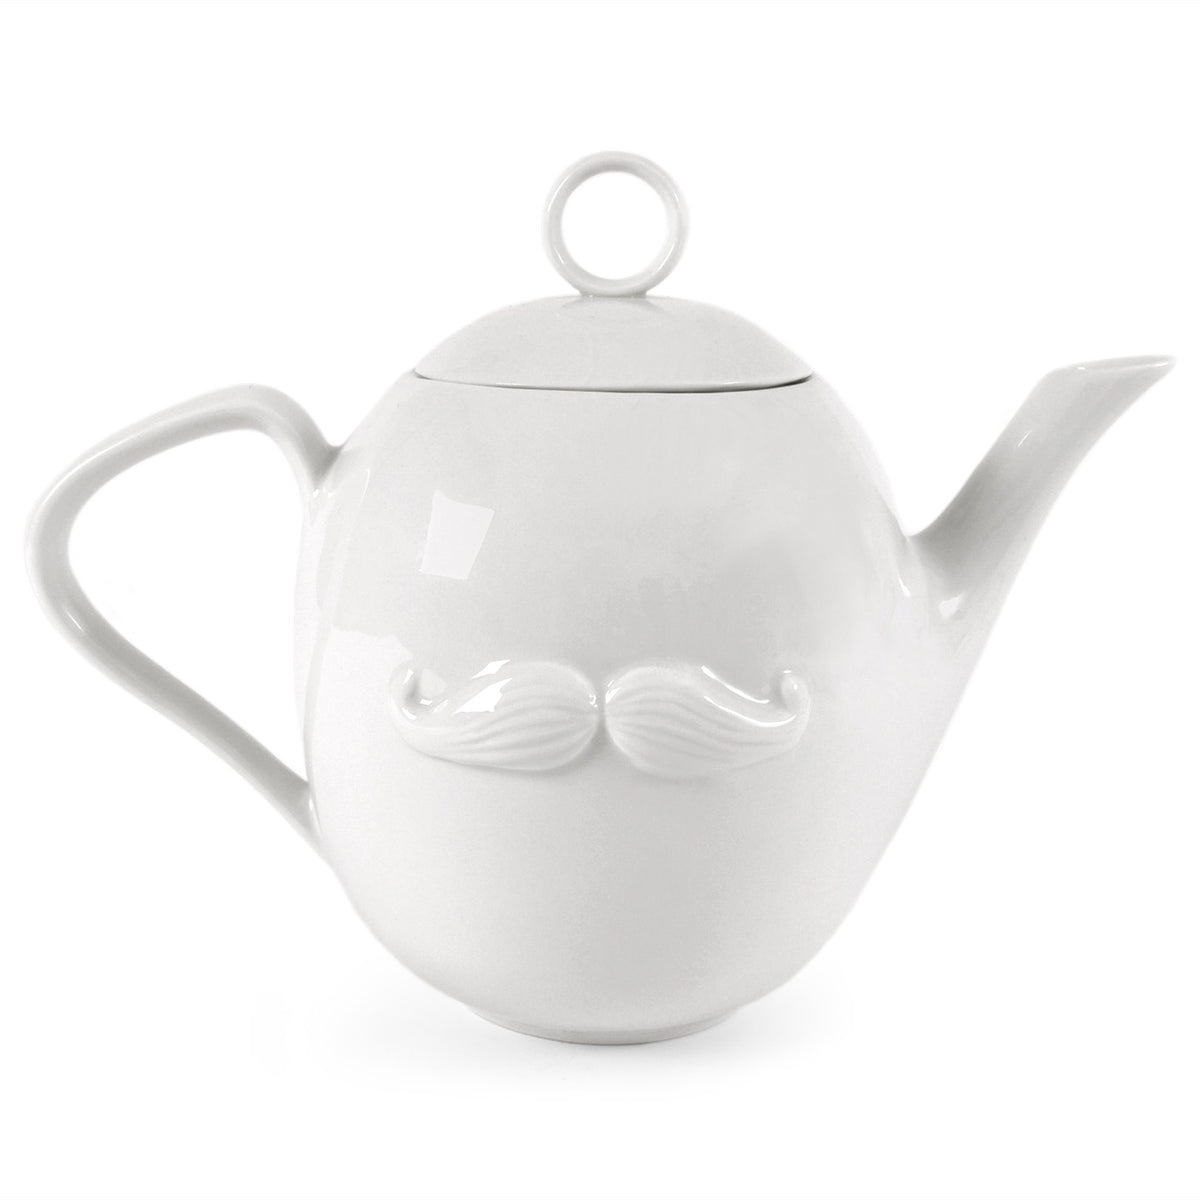 Muse Teapot by Jonathan Adler